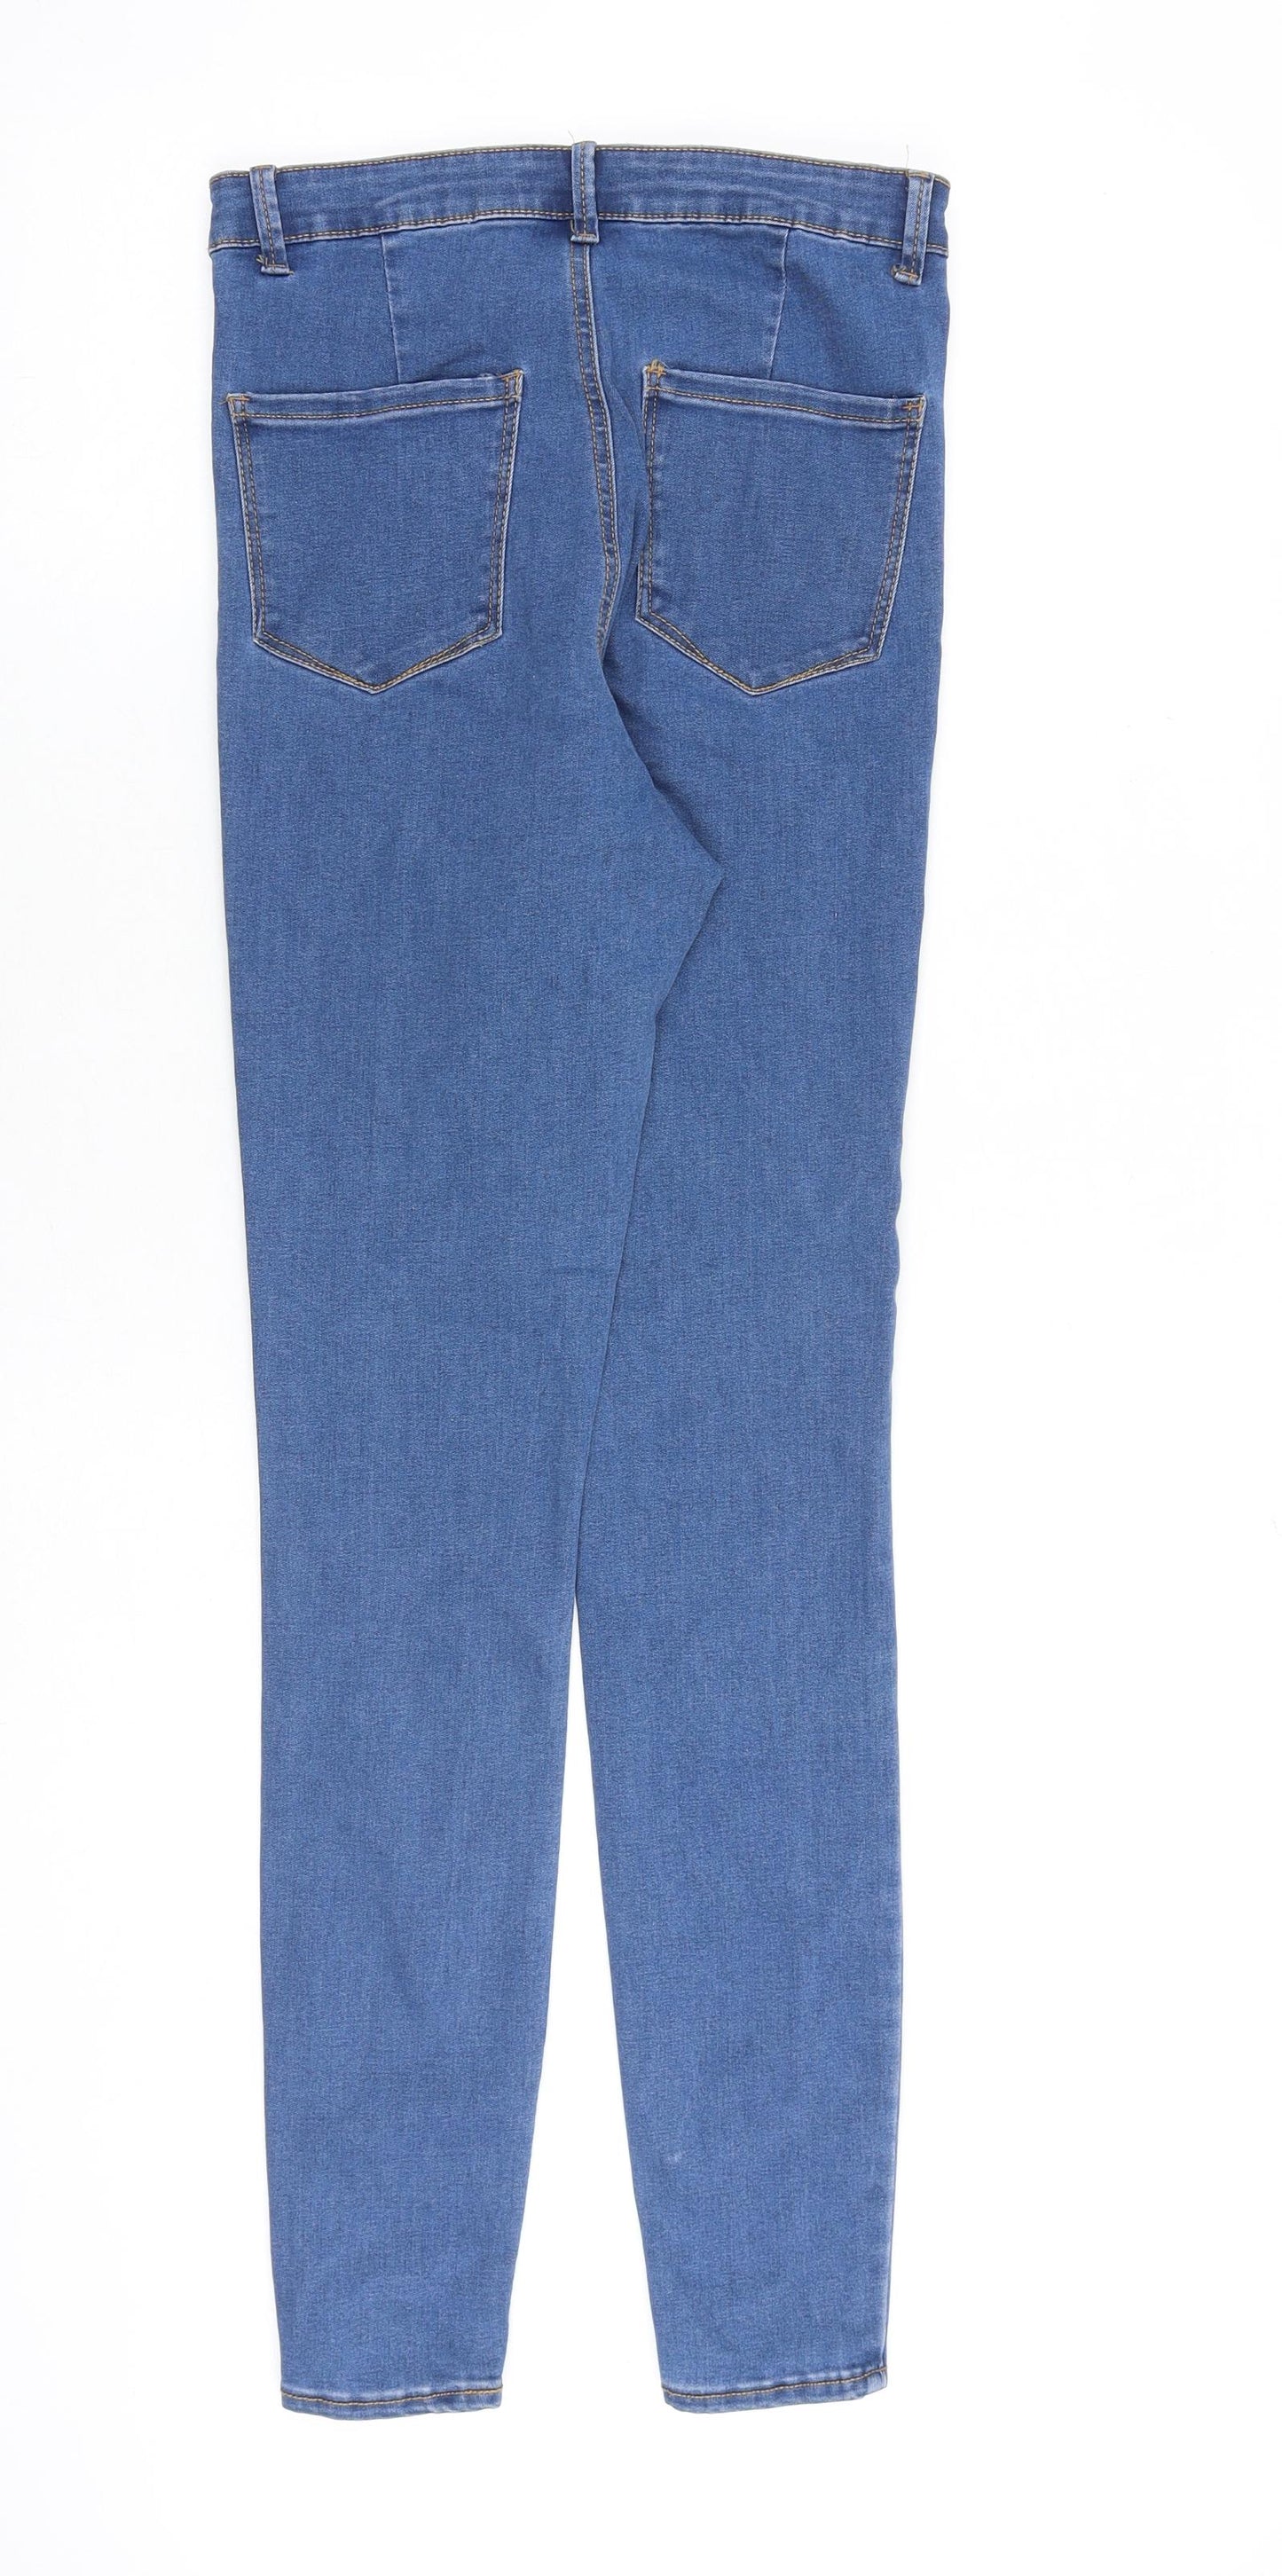 Denim & Co. Womens Blue Cotton Skinny Jeans Size 12 L31 in Regular Zip